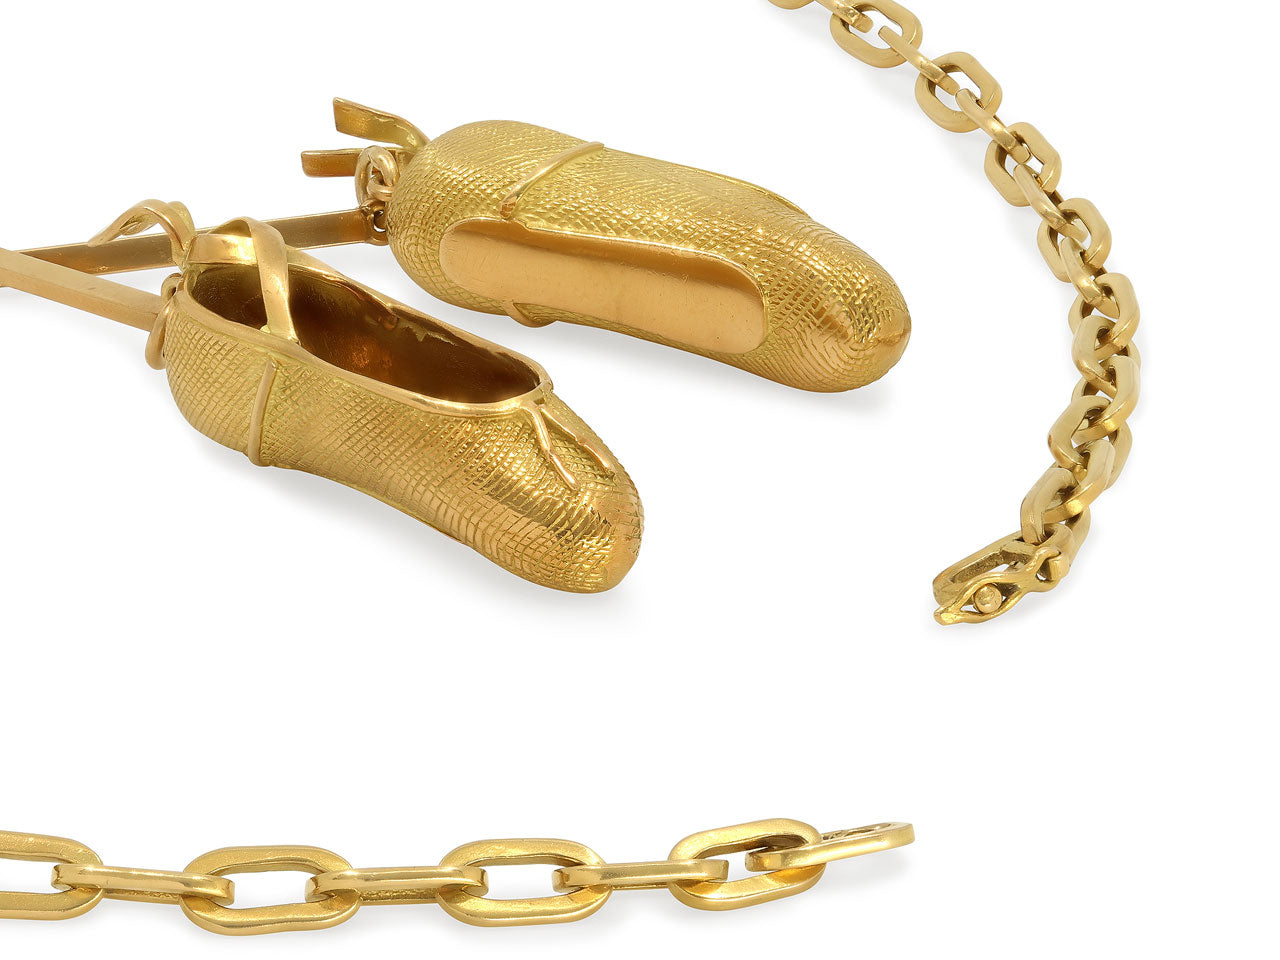 Ballet Slipper Pendant Necklace in 18K Gold